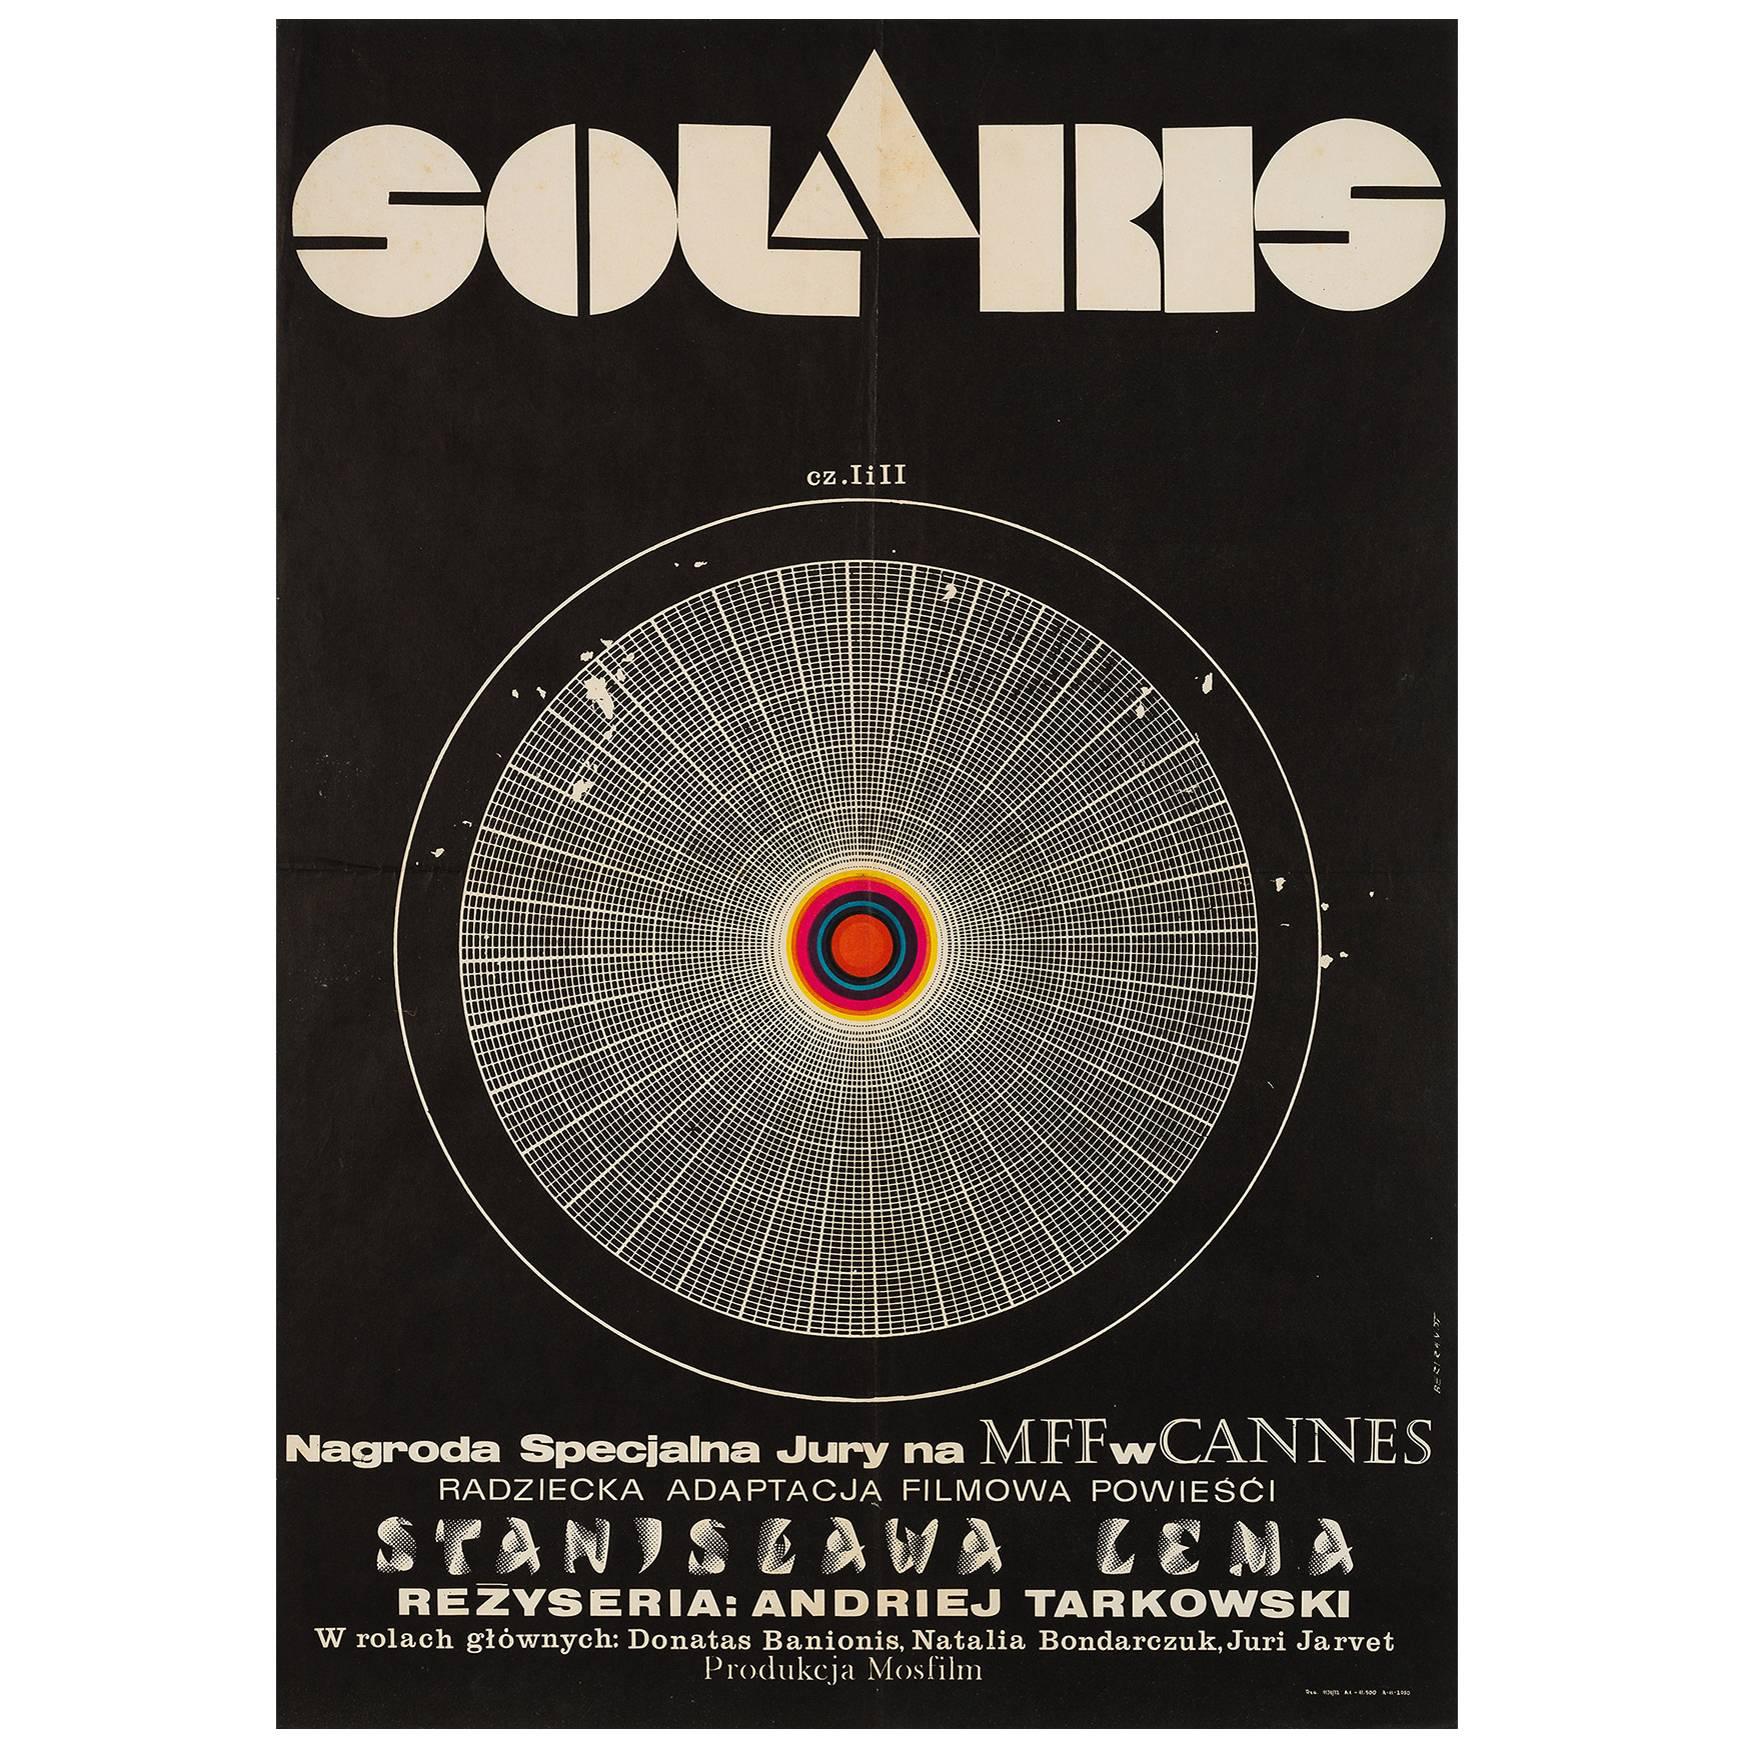 Solaris Original Polish Film Poster, Andrzej Bertrandt, 1972